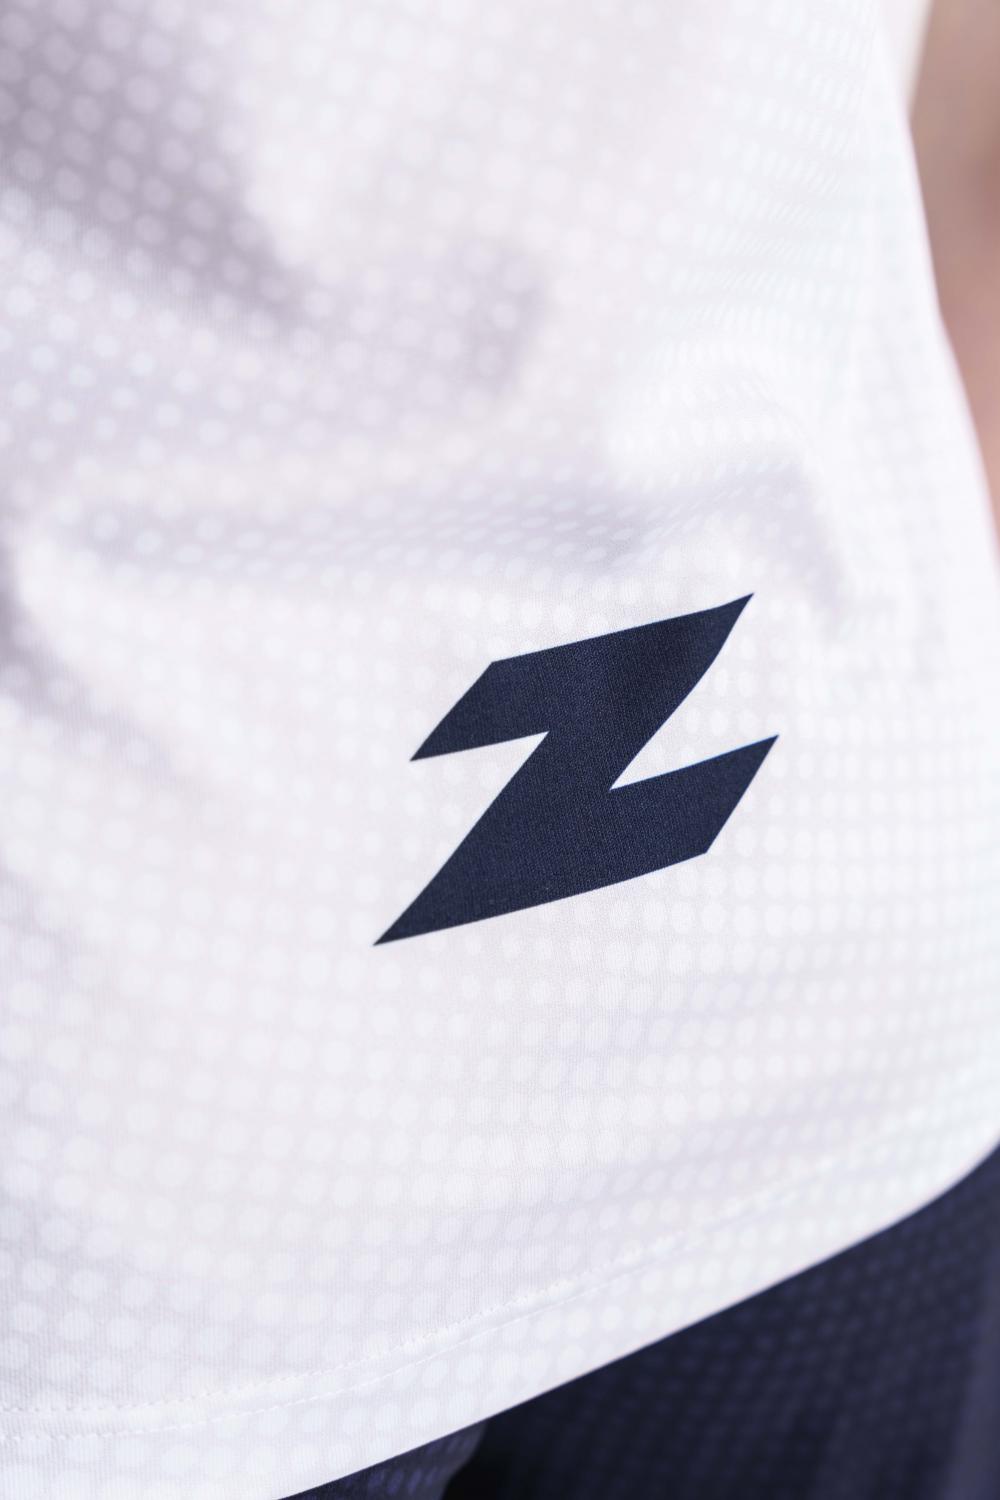 T-shirt manche courtes running hommes équipe de France Z3R0D